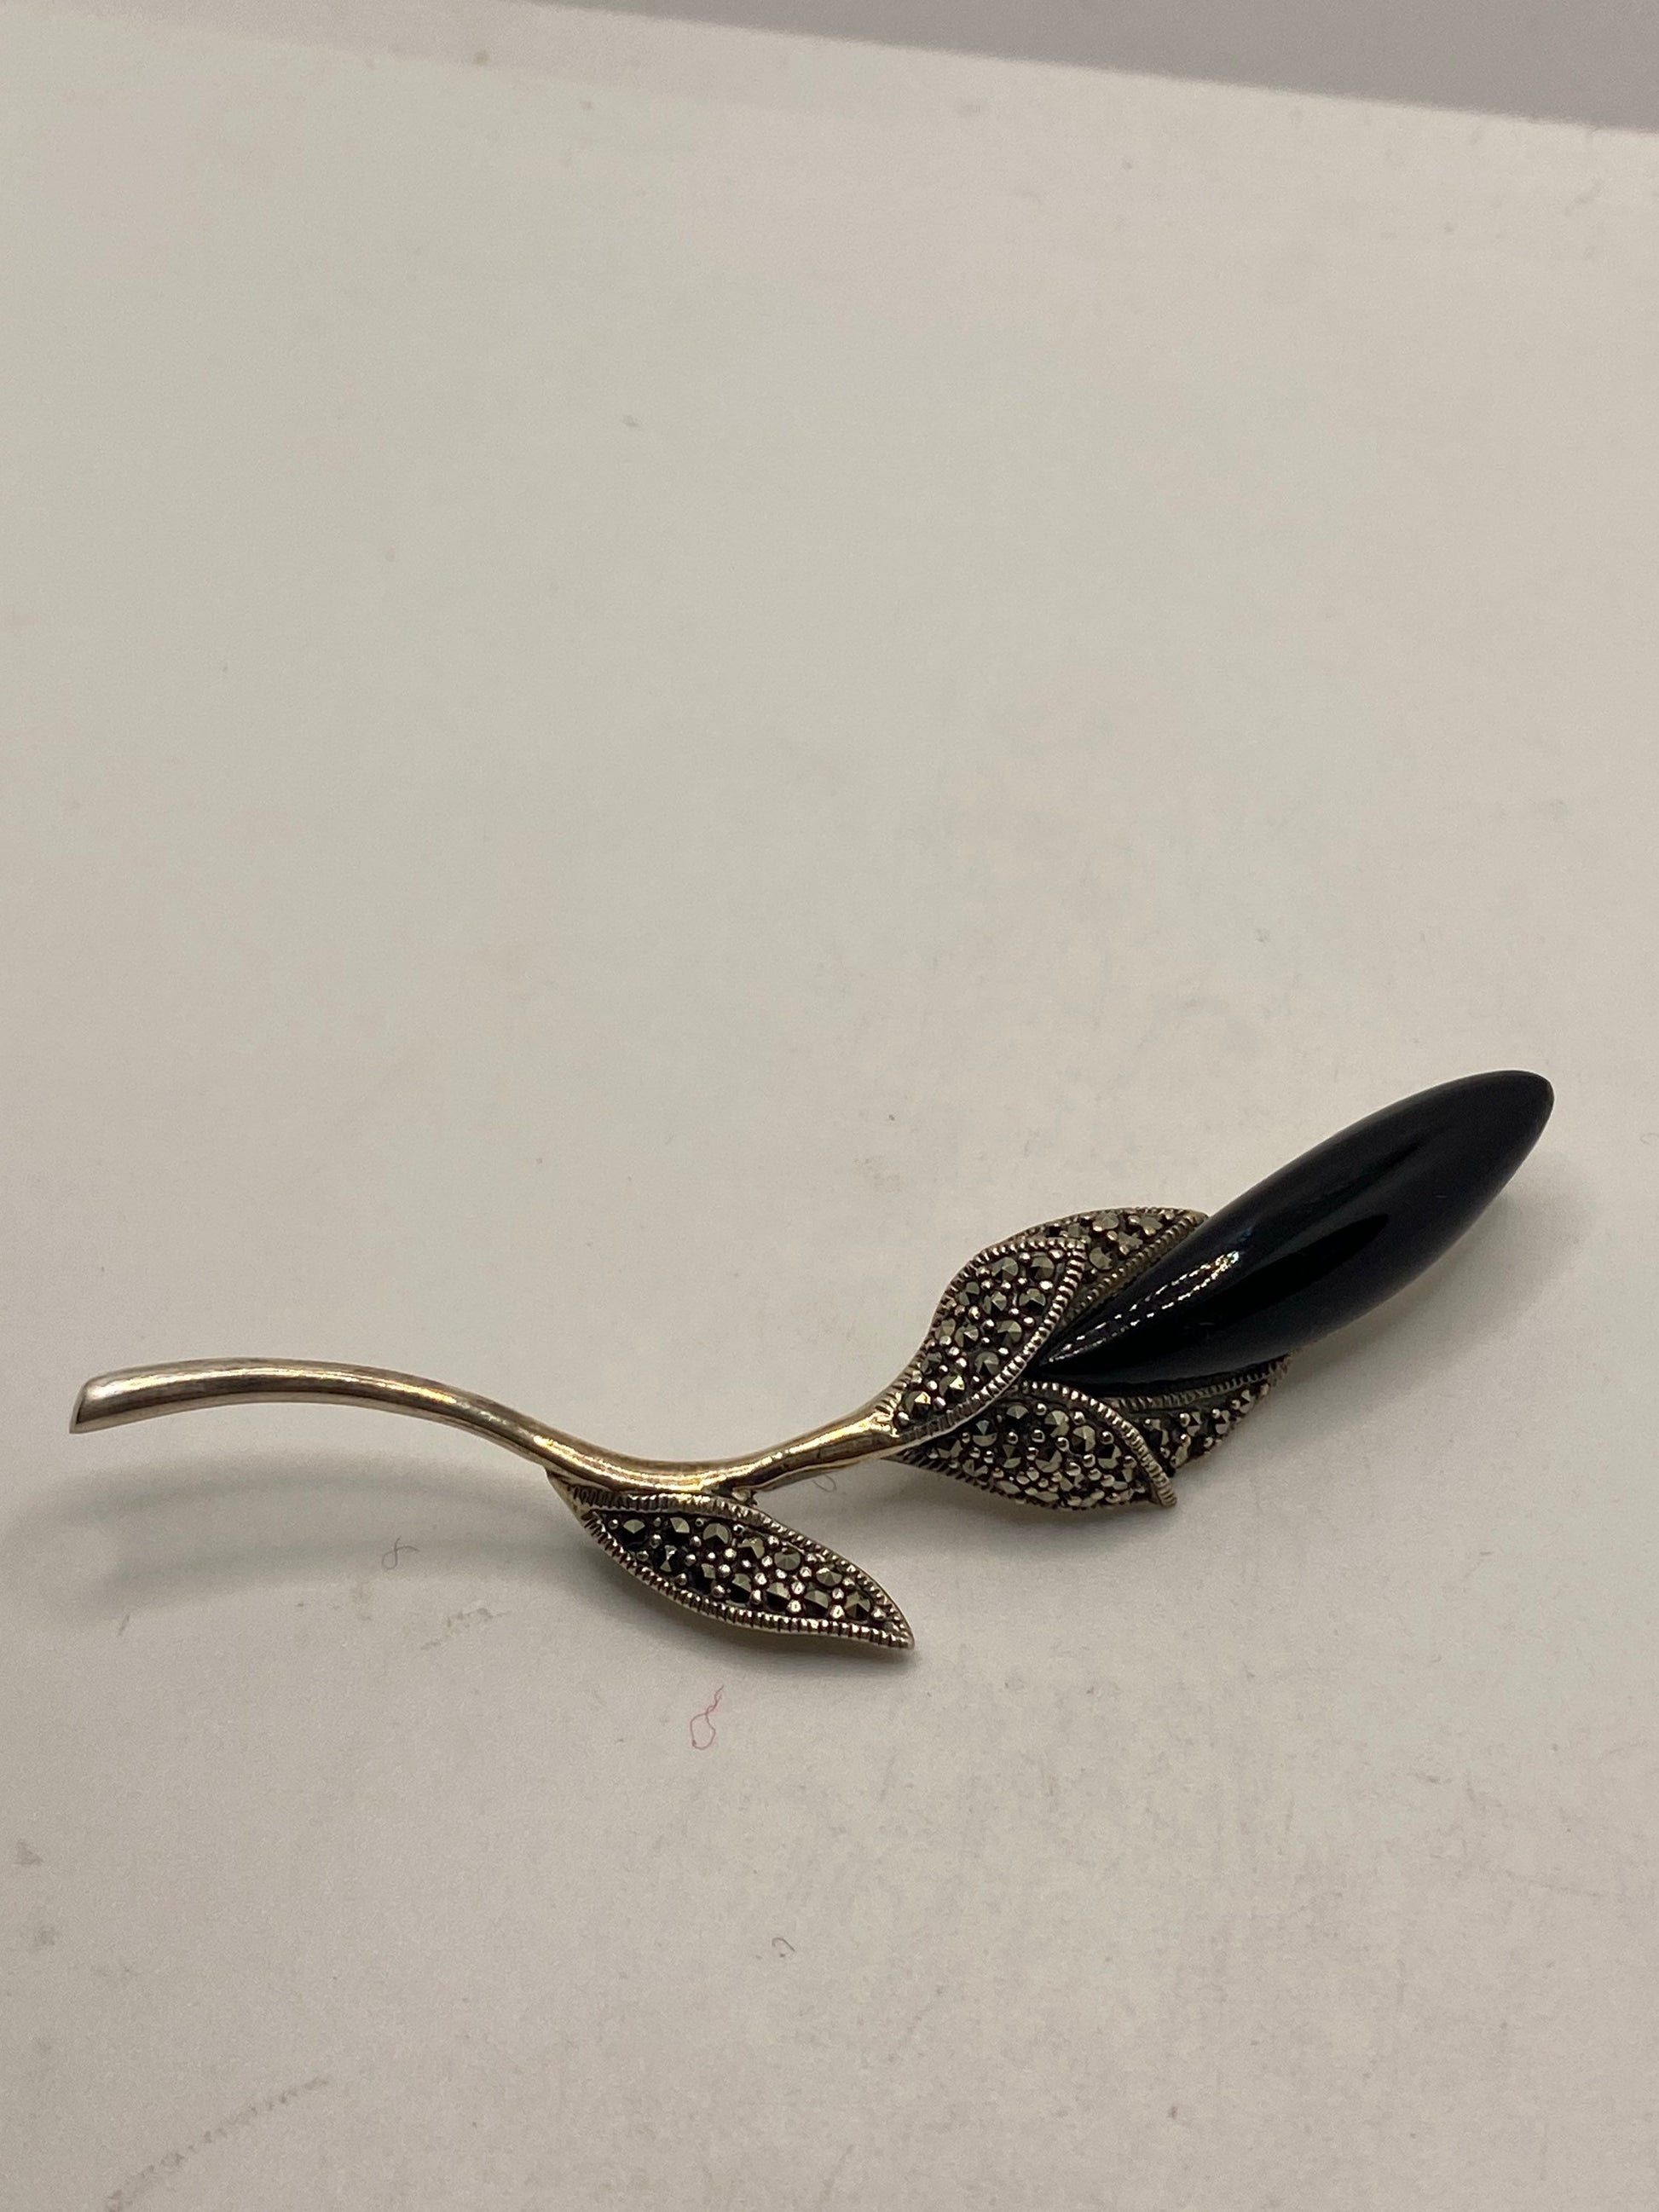 Vintage Black Onyx Flower Pin Marcasite 925 Sterling Silver Brooch